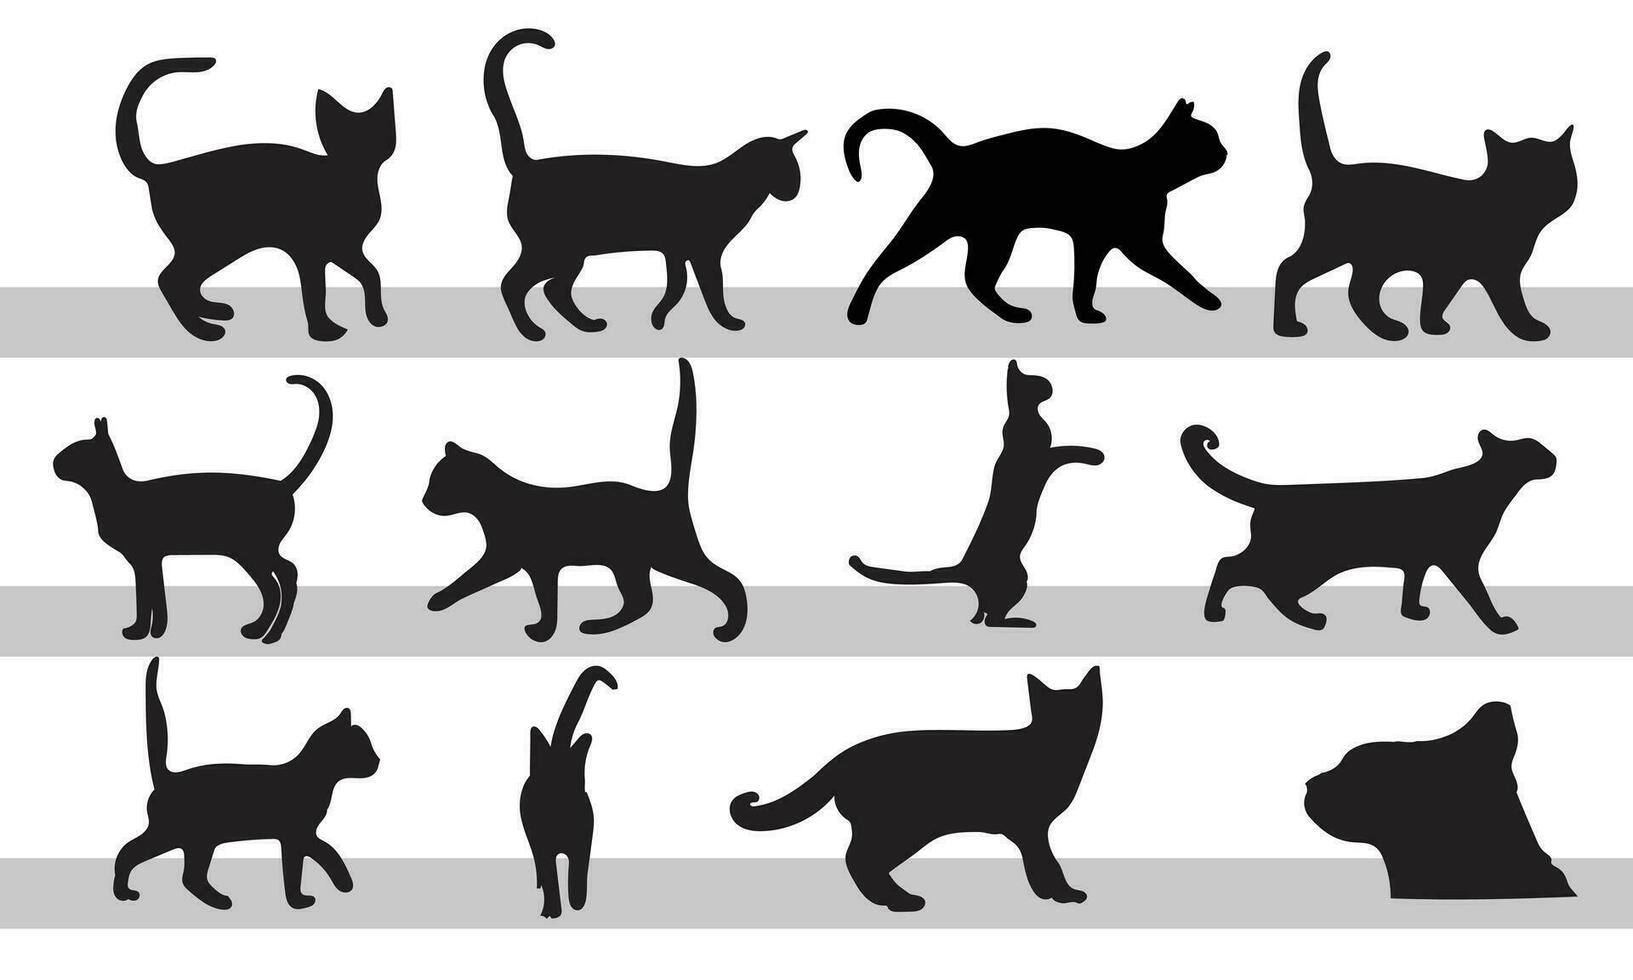 Webcat silhouette design set, Vector cats set, Cats silhouettes collection